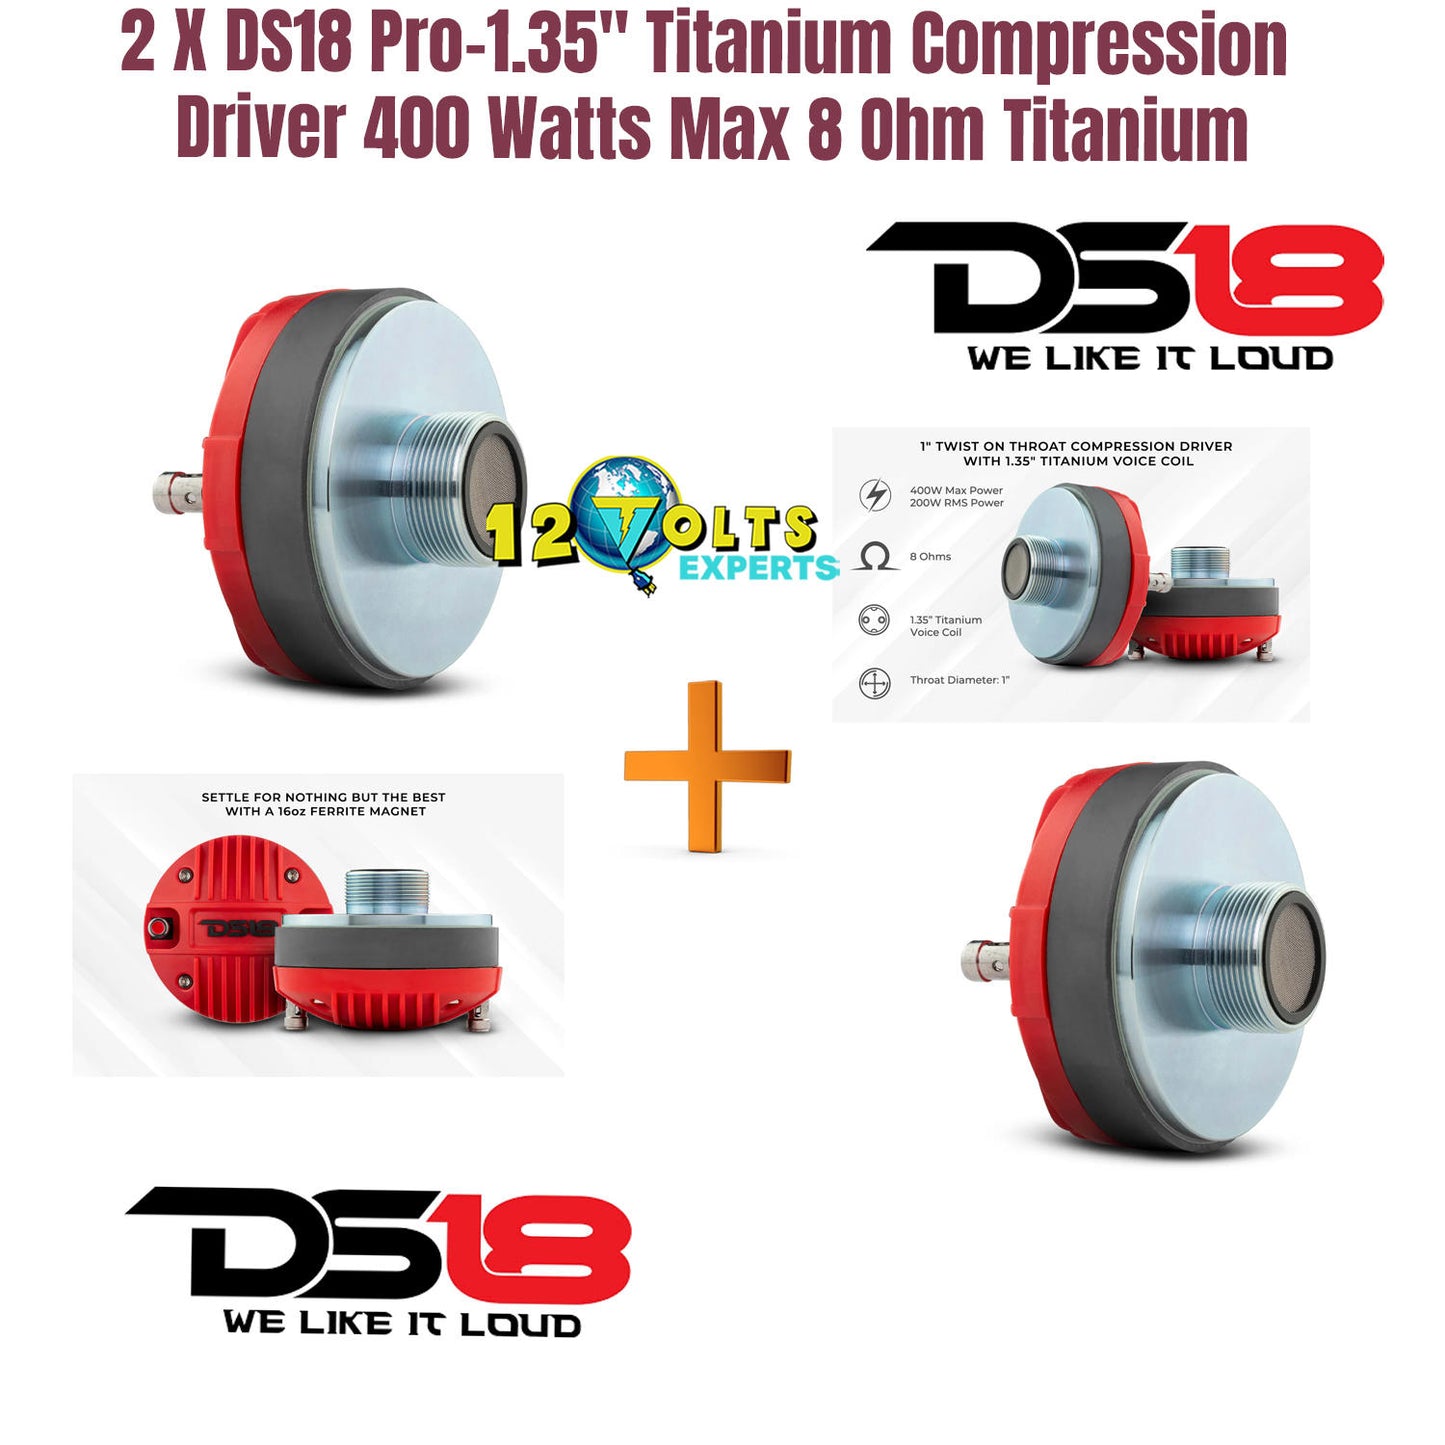 2 X DS18 Pro-1.35" Titanium Compression Driver 400 Watts Max 8 Ohm Titanium